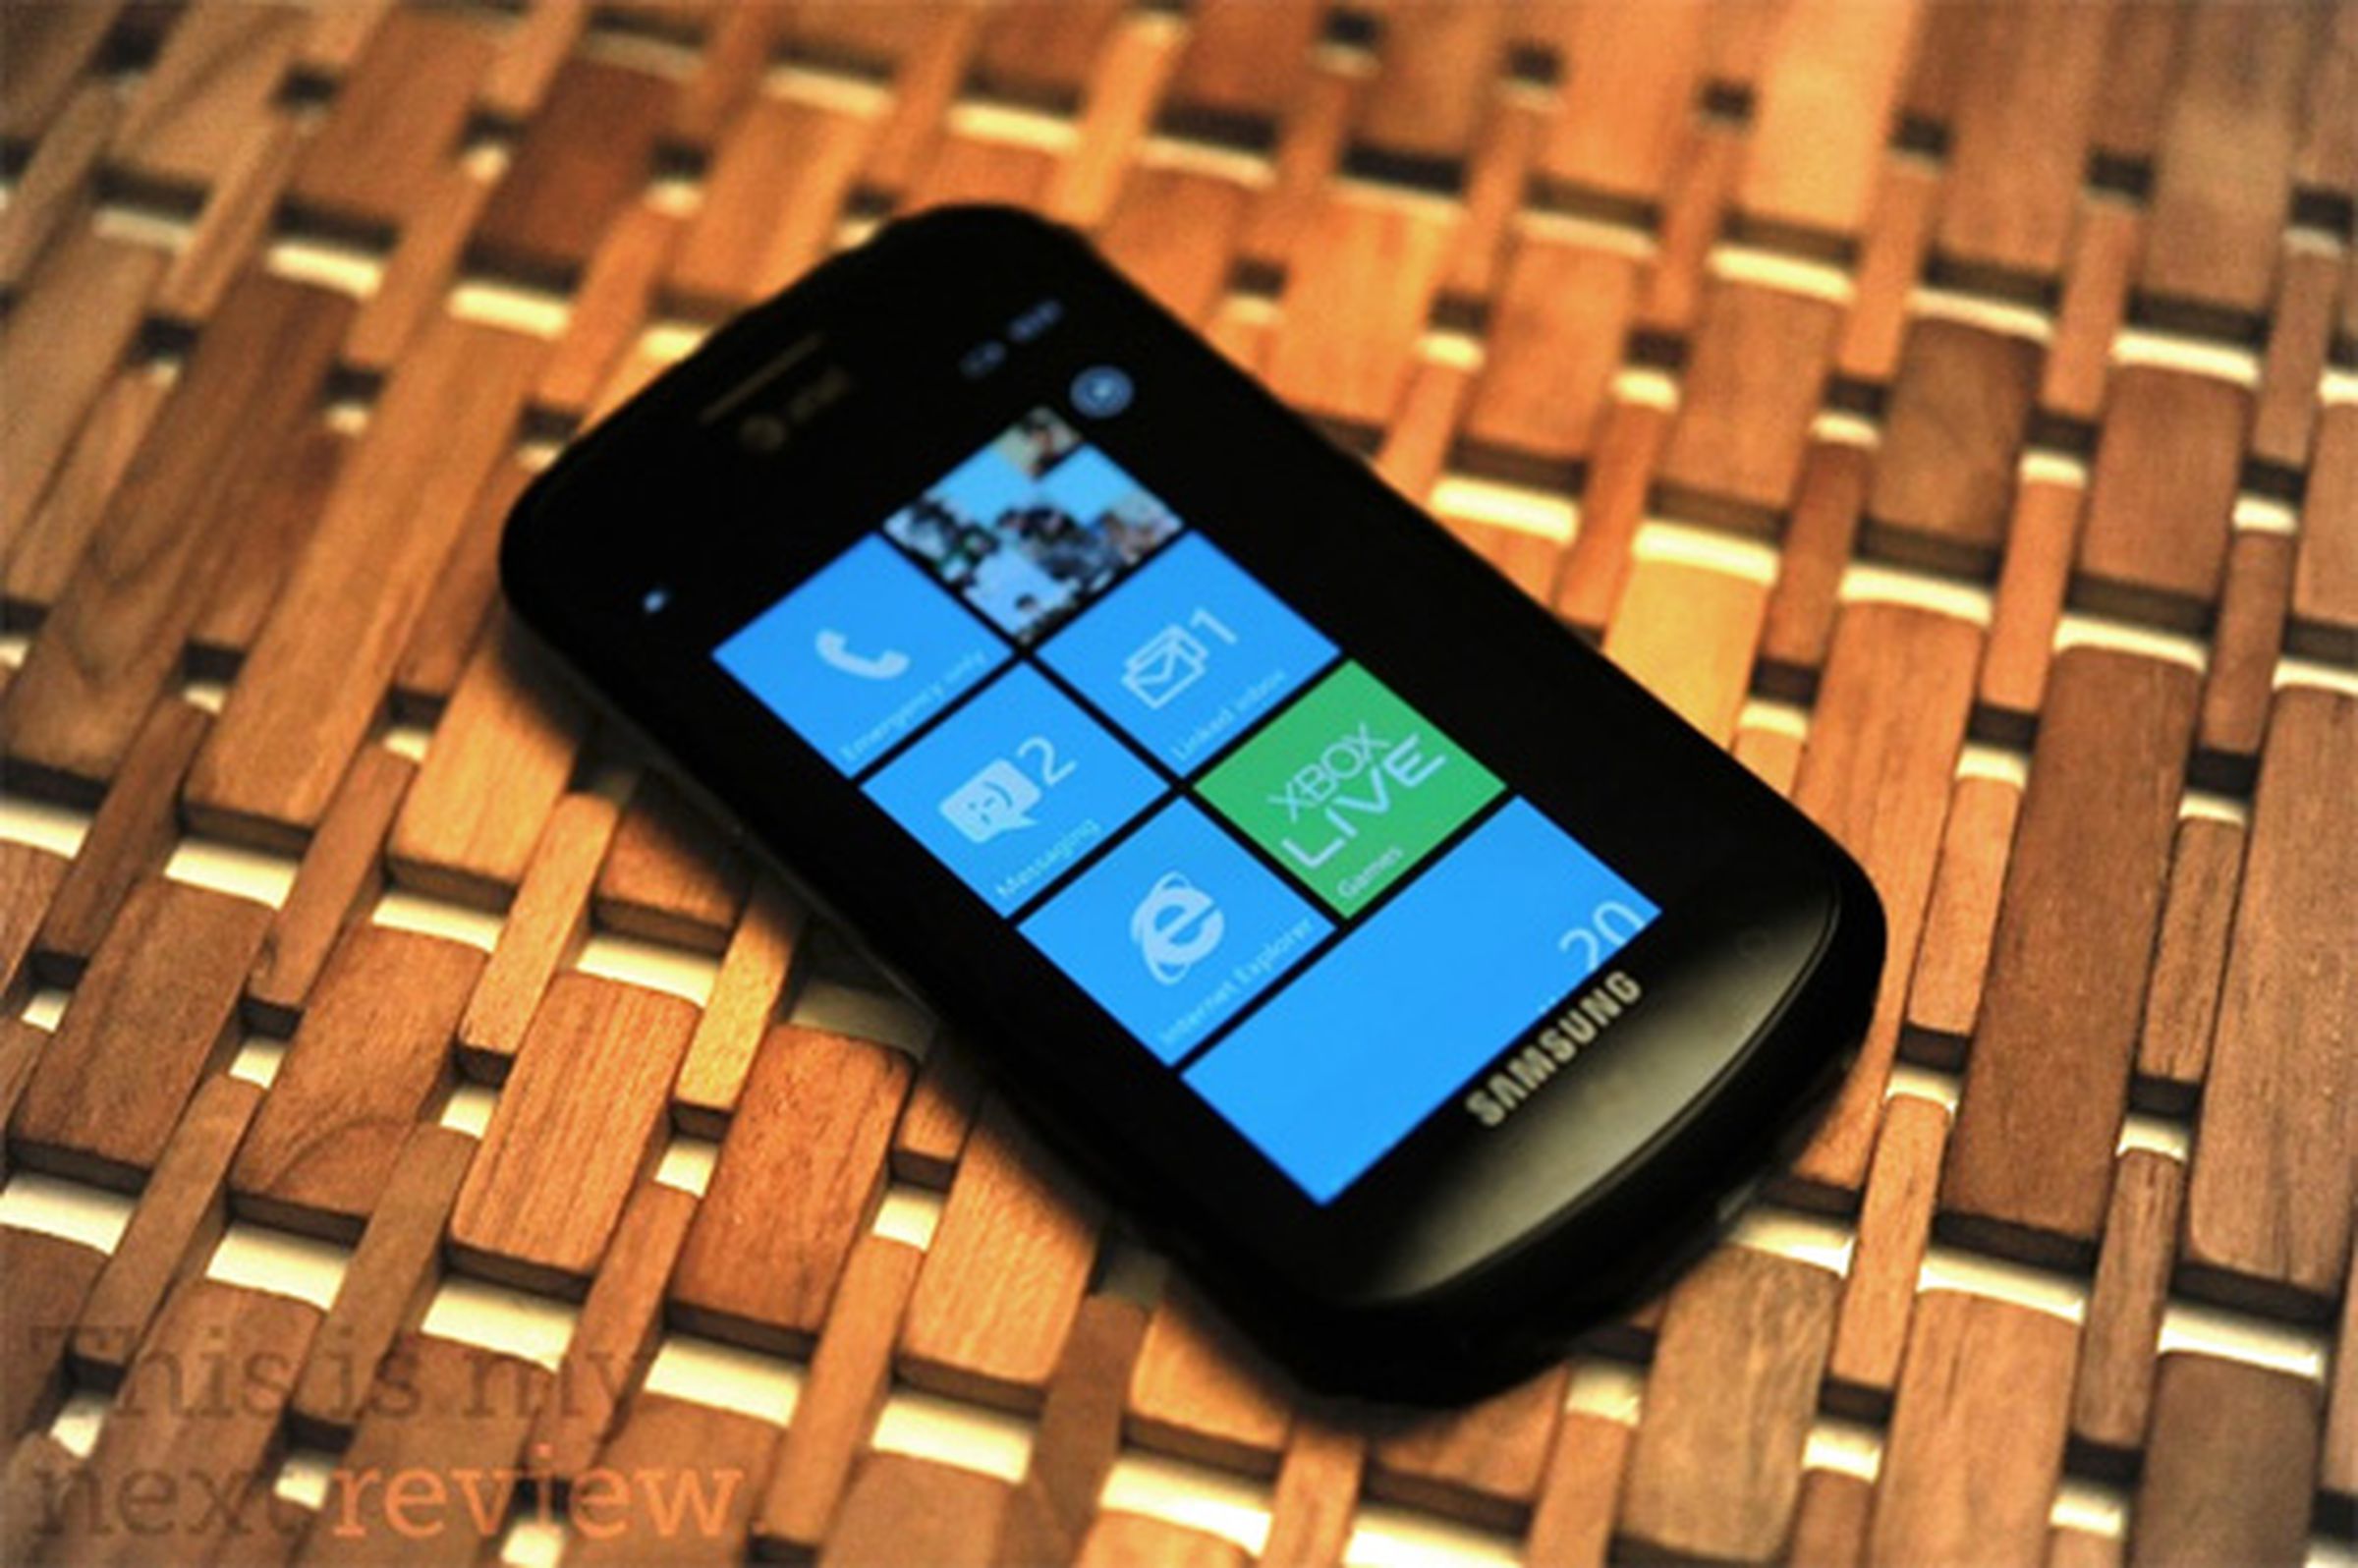 Windows Phone Mango 11